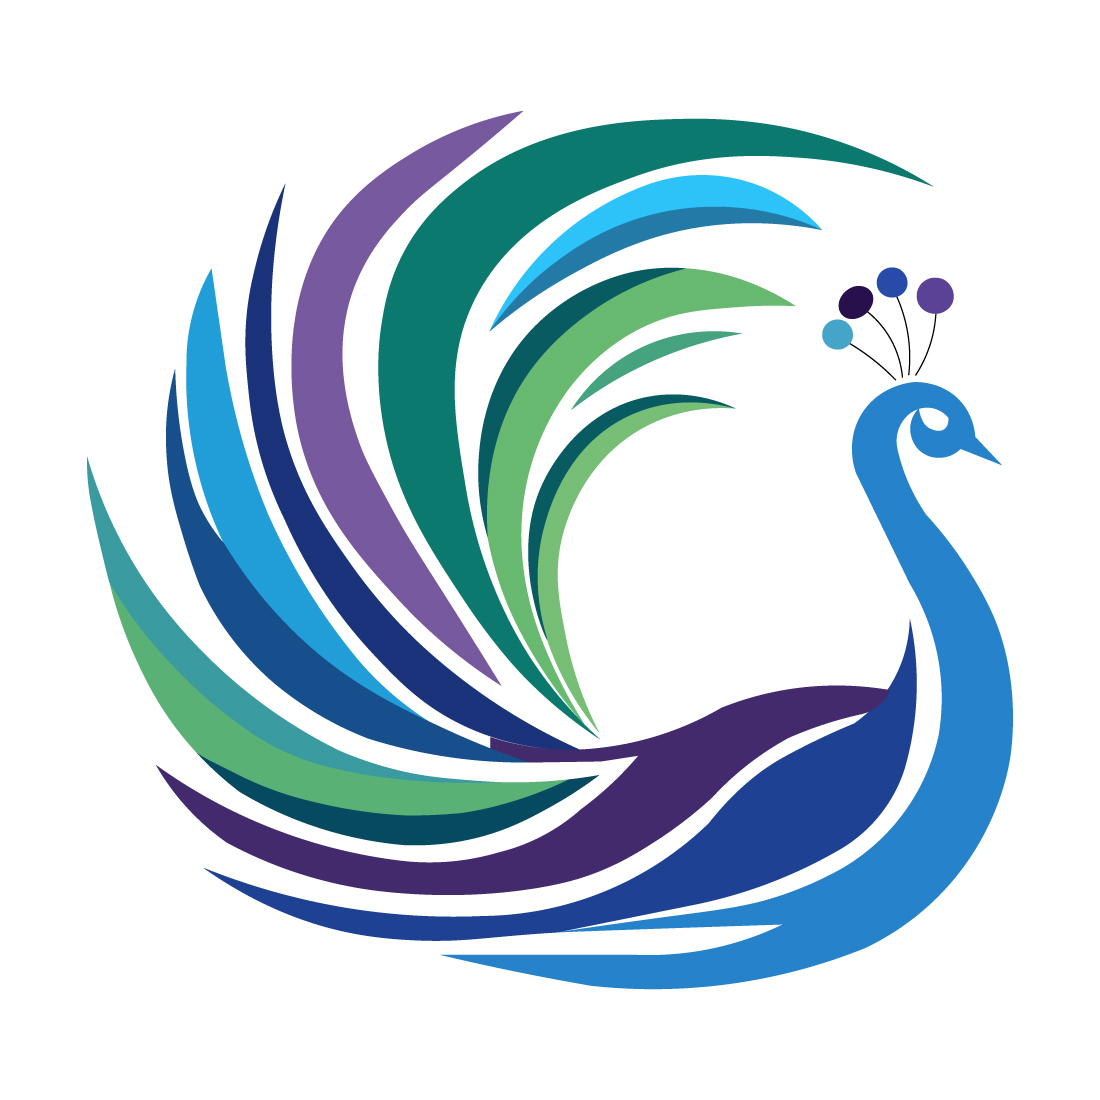 Peacock's logo preview image.